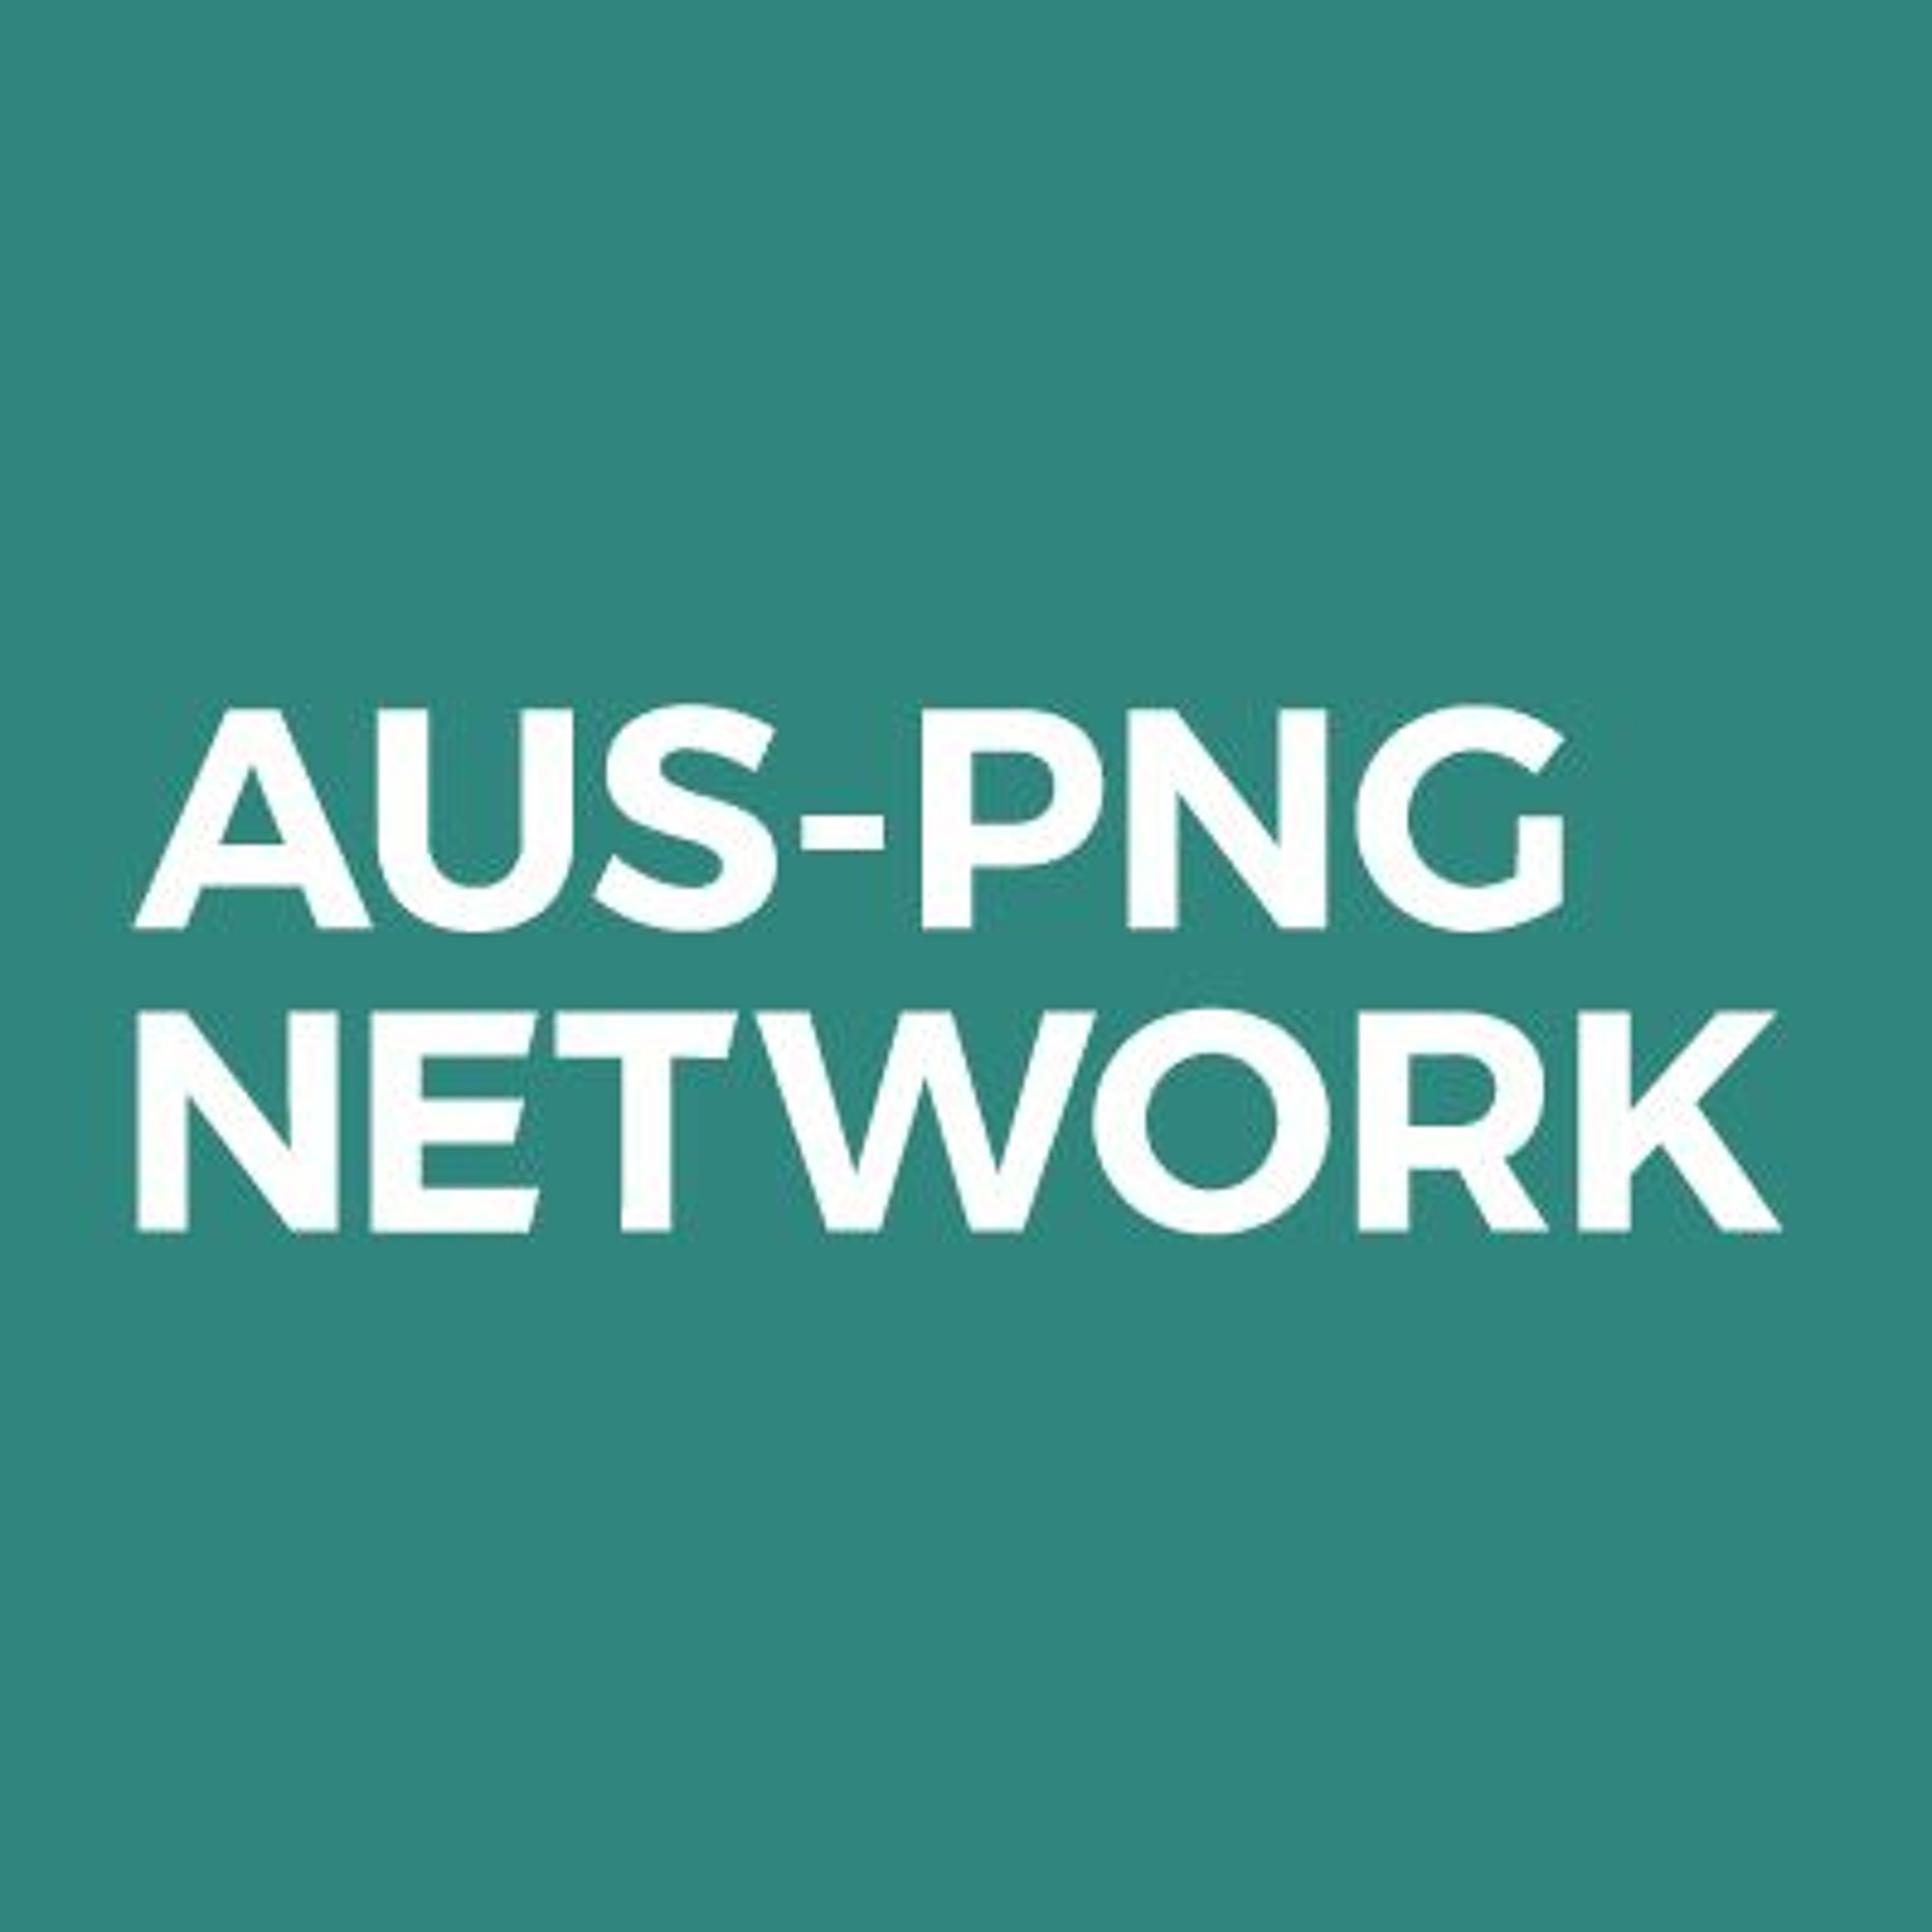 Aus-PNG Network: Women in politics in PNG - Vagi Hemetsberger